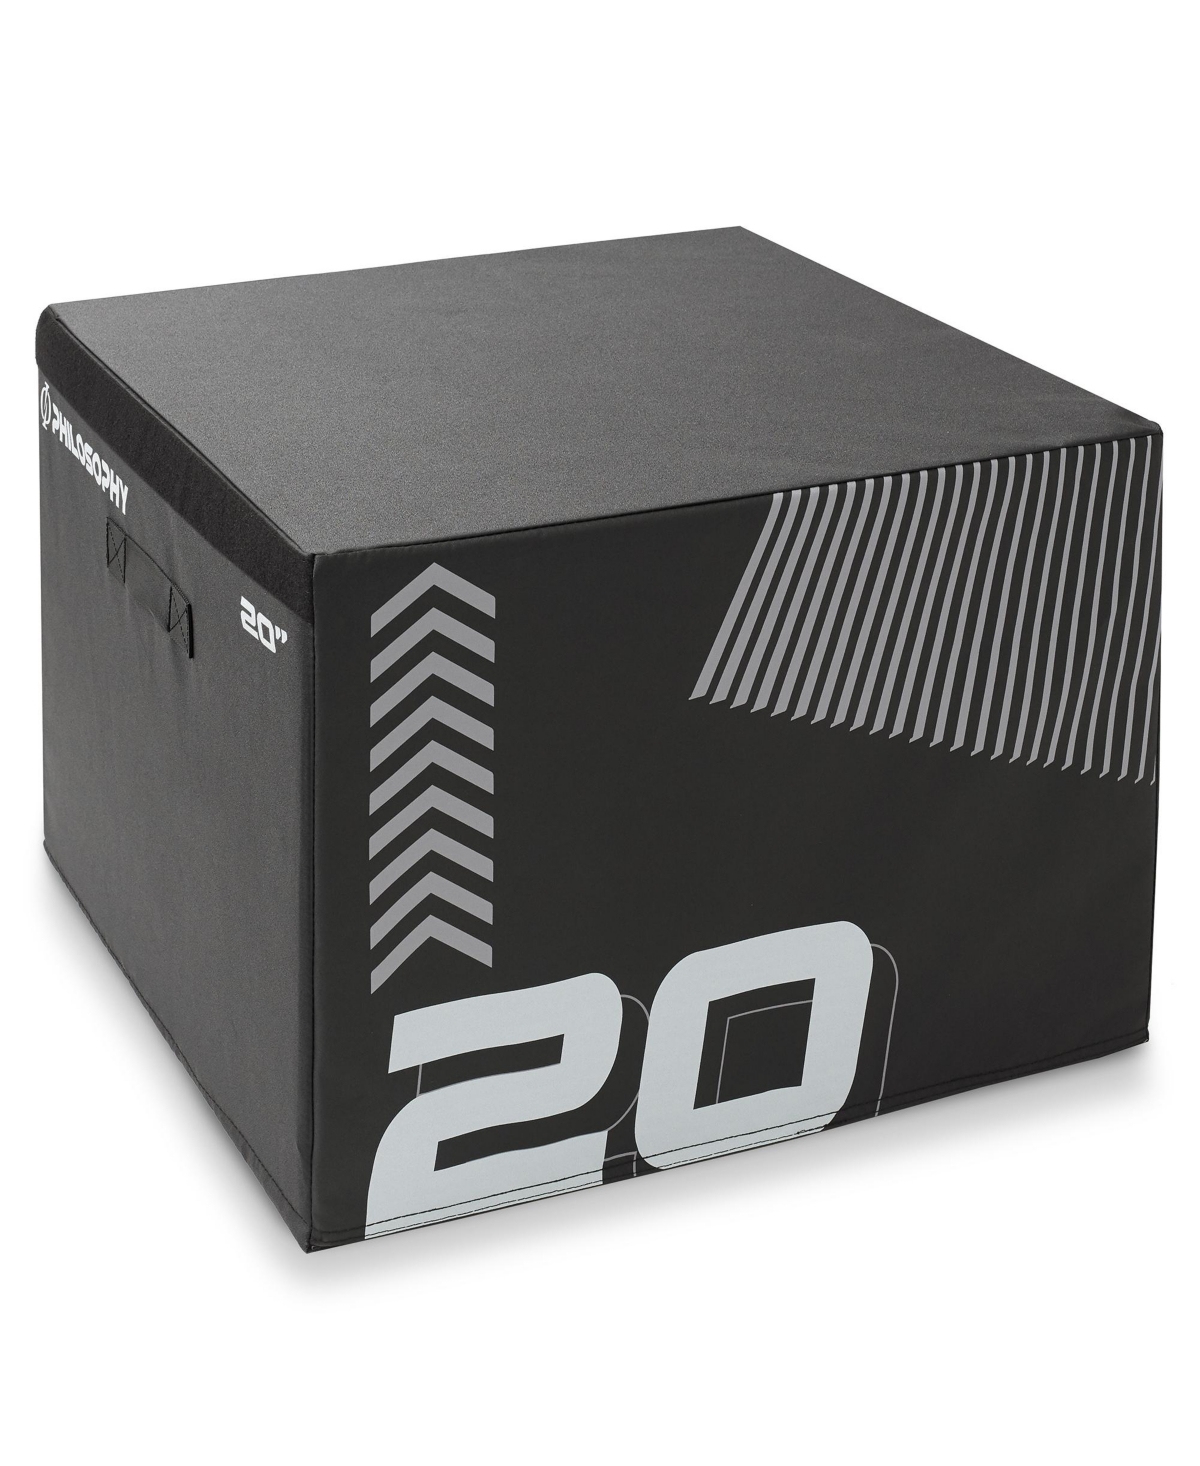 20" Soft Foam Plyometric Box - Jumping Plyo Box for Training and Conditioning - Black